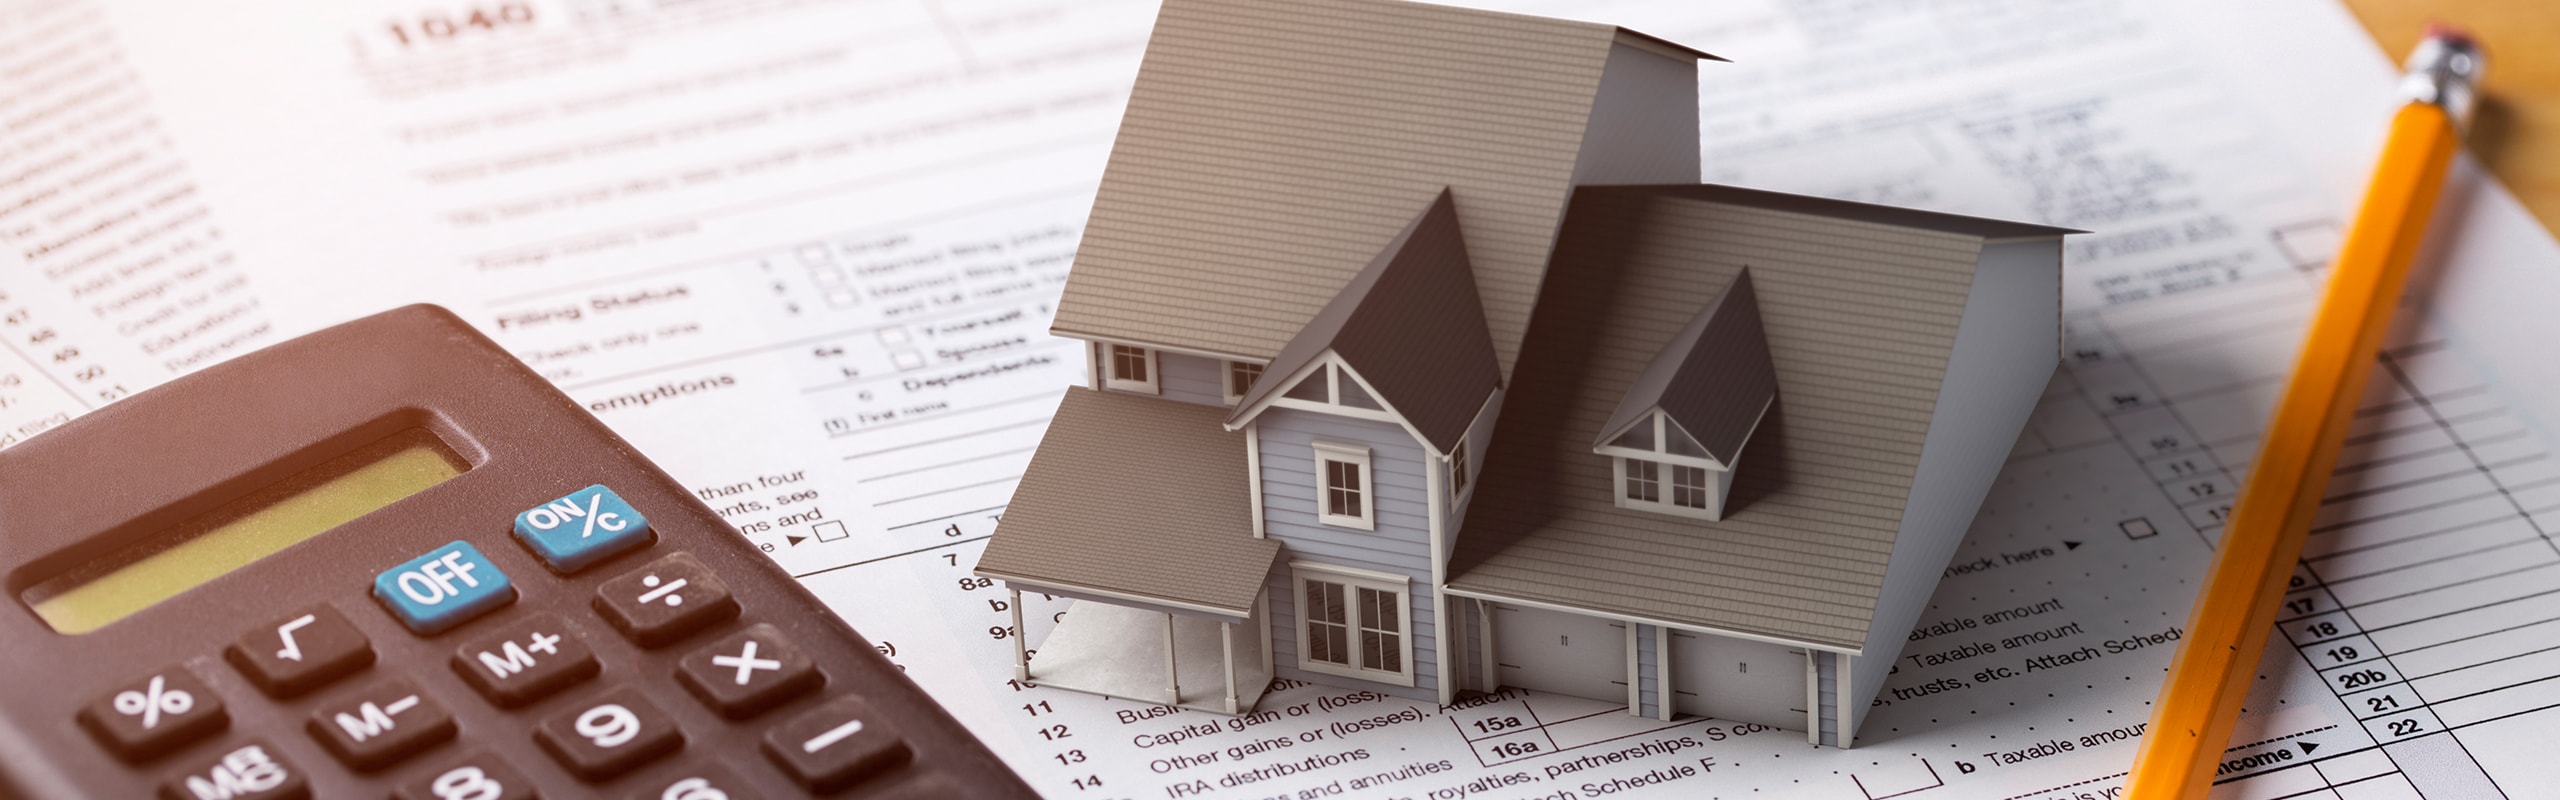 Home equity borrowing clarification